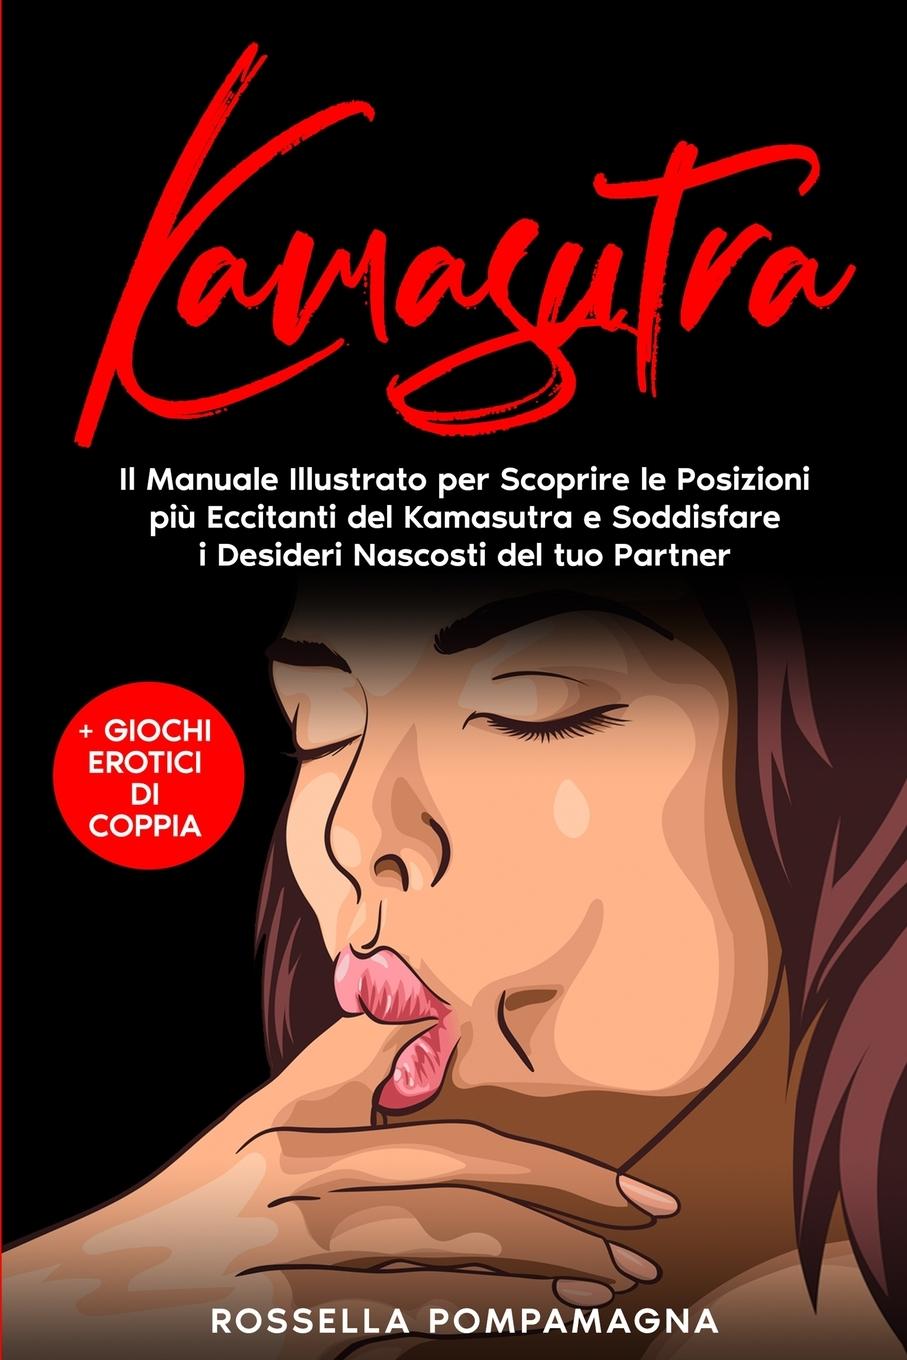 Book Kamasutra 